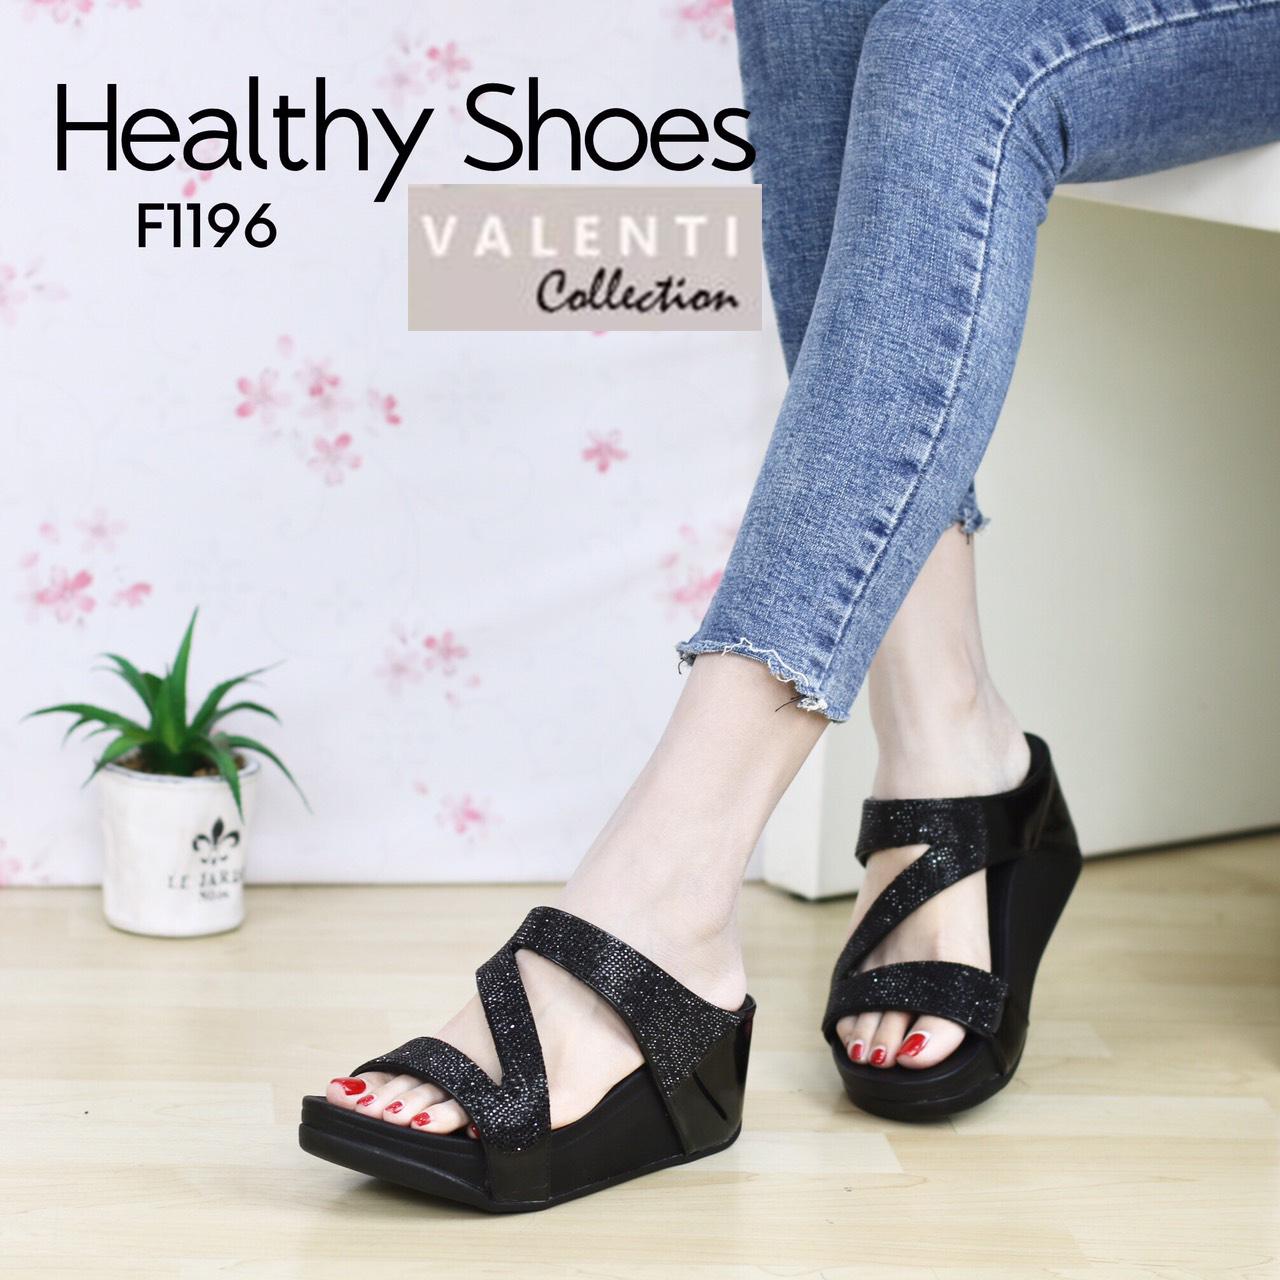 Valenti Collection รองเท้าเพื่อสุขภาพ Health & massage Therapy flipflop นุ่มมาก เบา ใส่สบาย รุ่น F1196 Black (สีดำ)